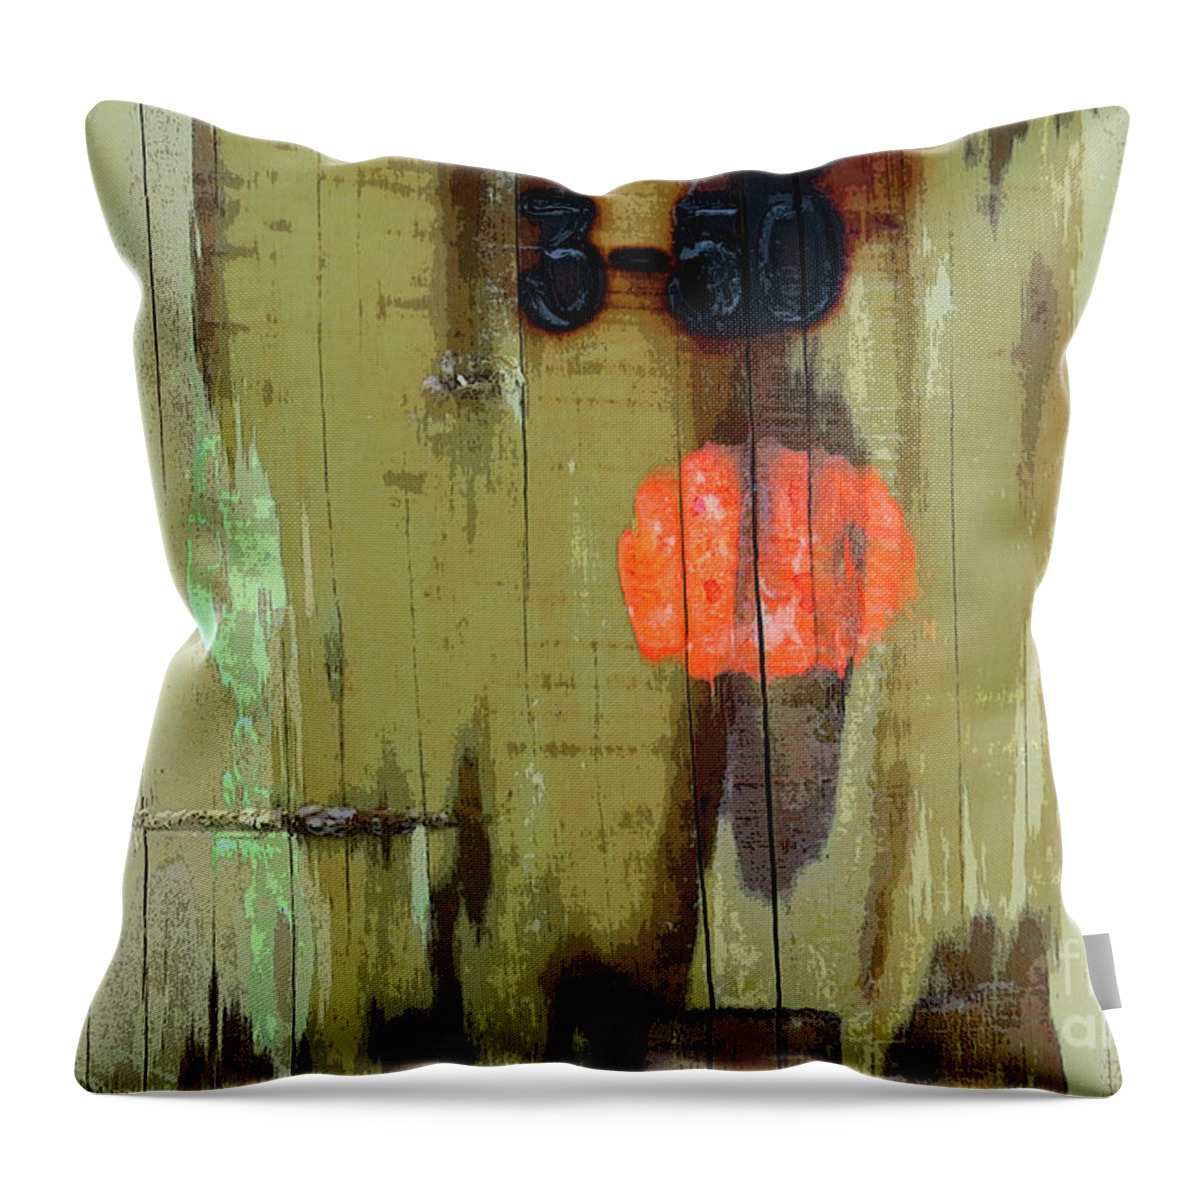 Sandra Church Throw Pillow featuring the photograph Orange Spot by Sandra Church